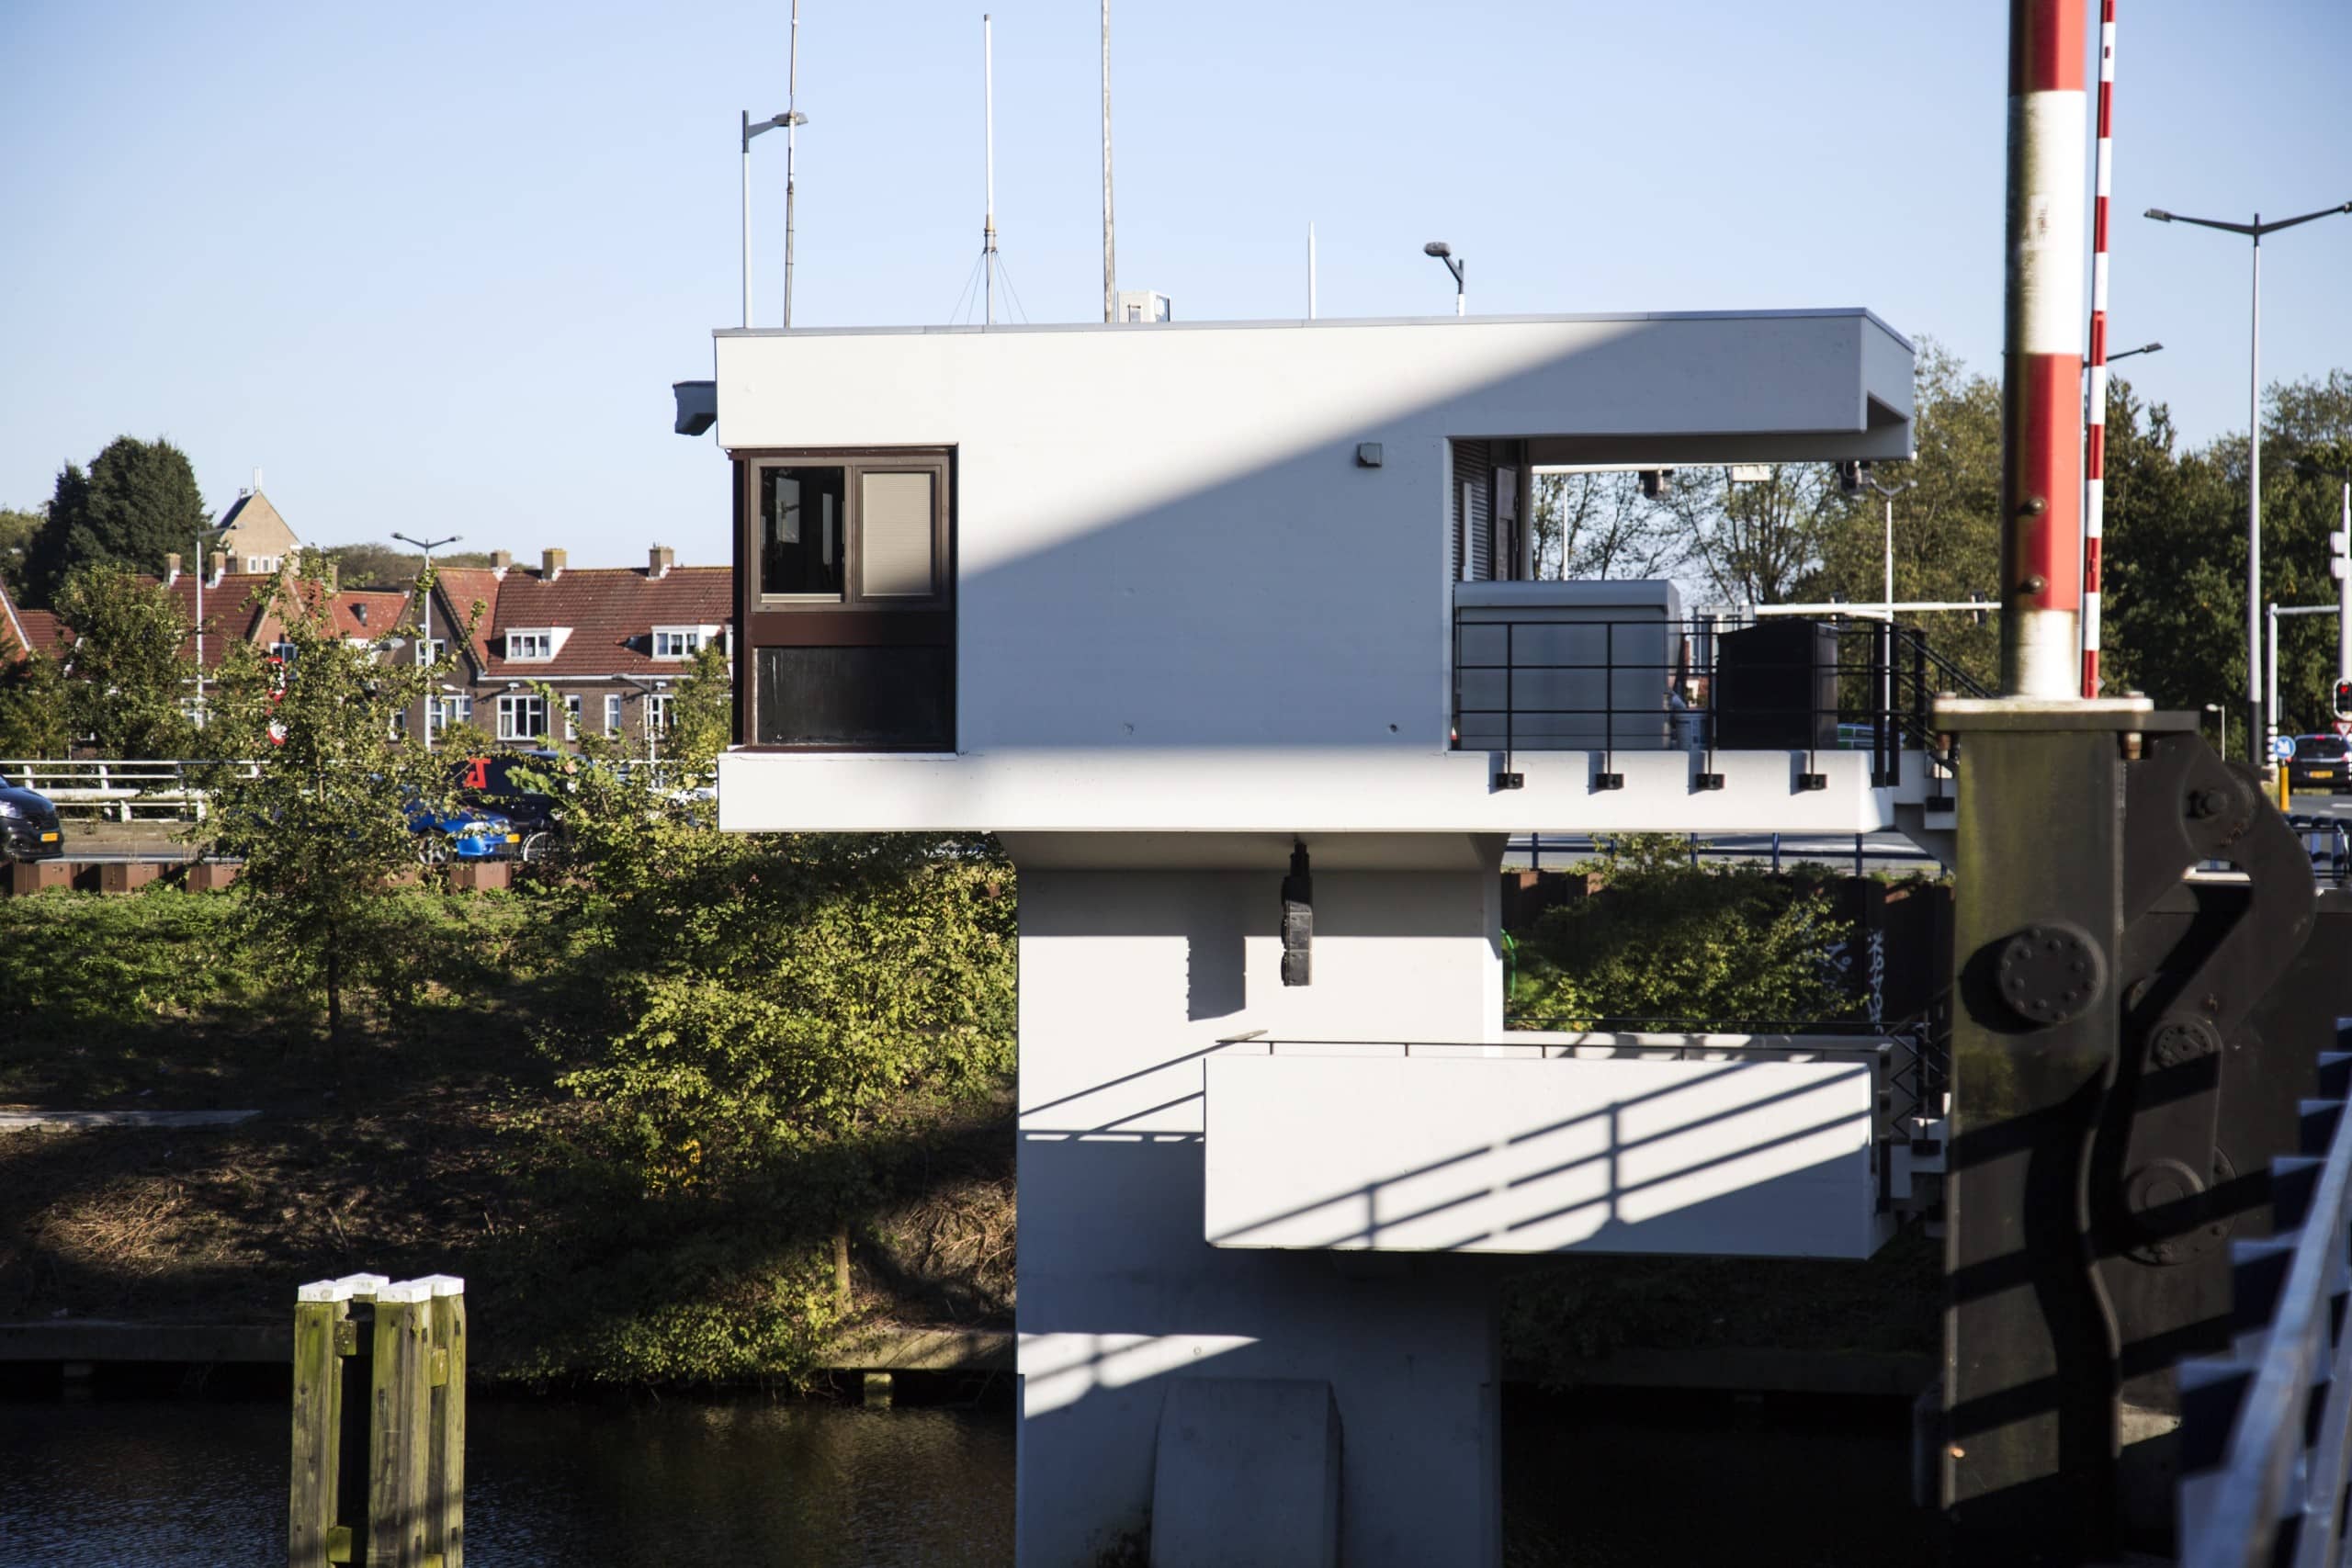 Bridge House Meeuwenpleinbrug, von Dirk Sterenberg, Sweets Hotel, Foto: Mirjam Bleeker